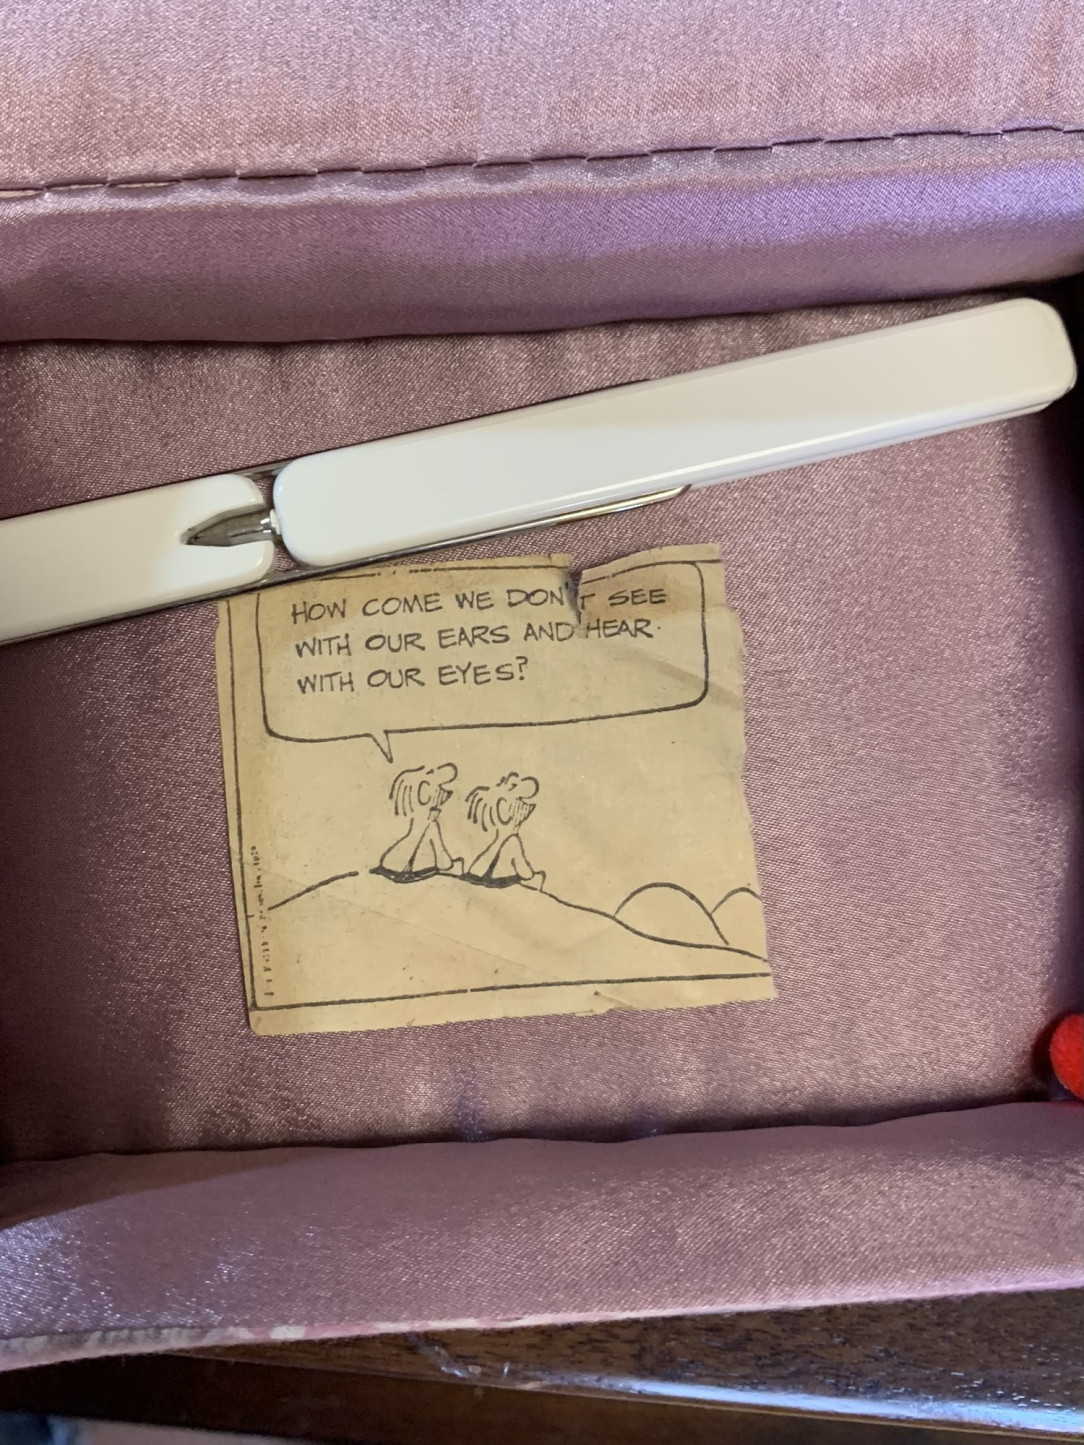 In a jewelry box at Grandma’s